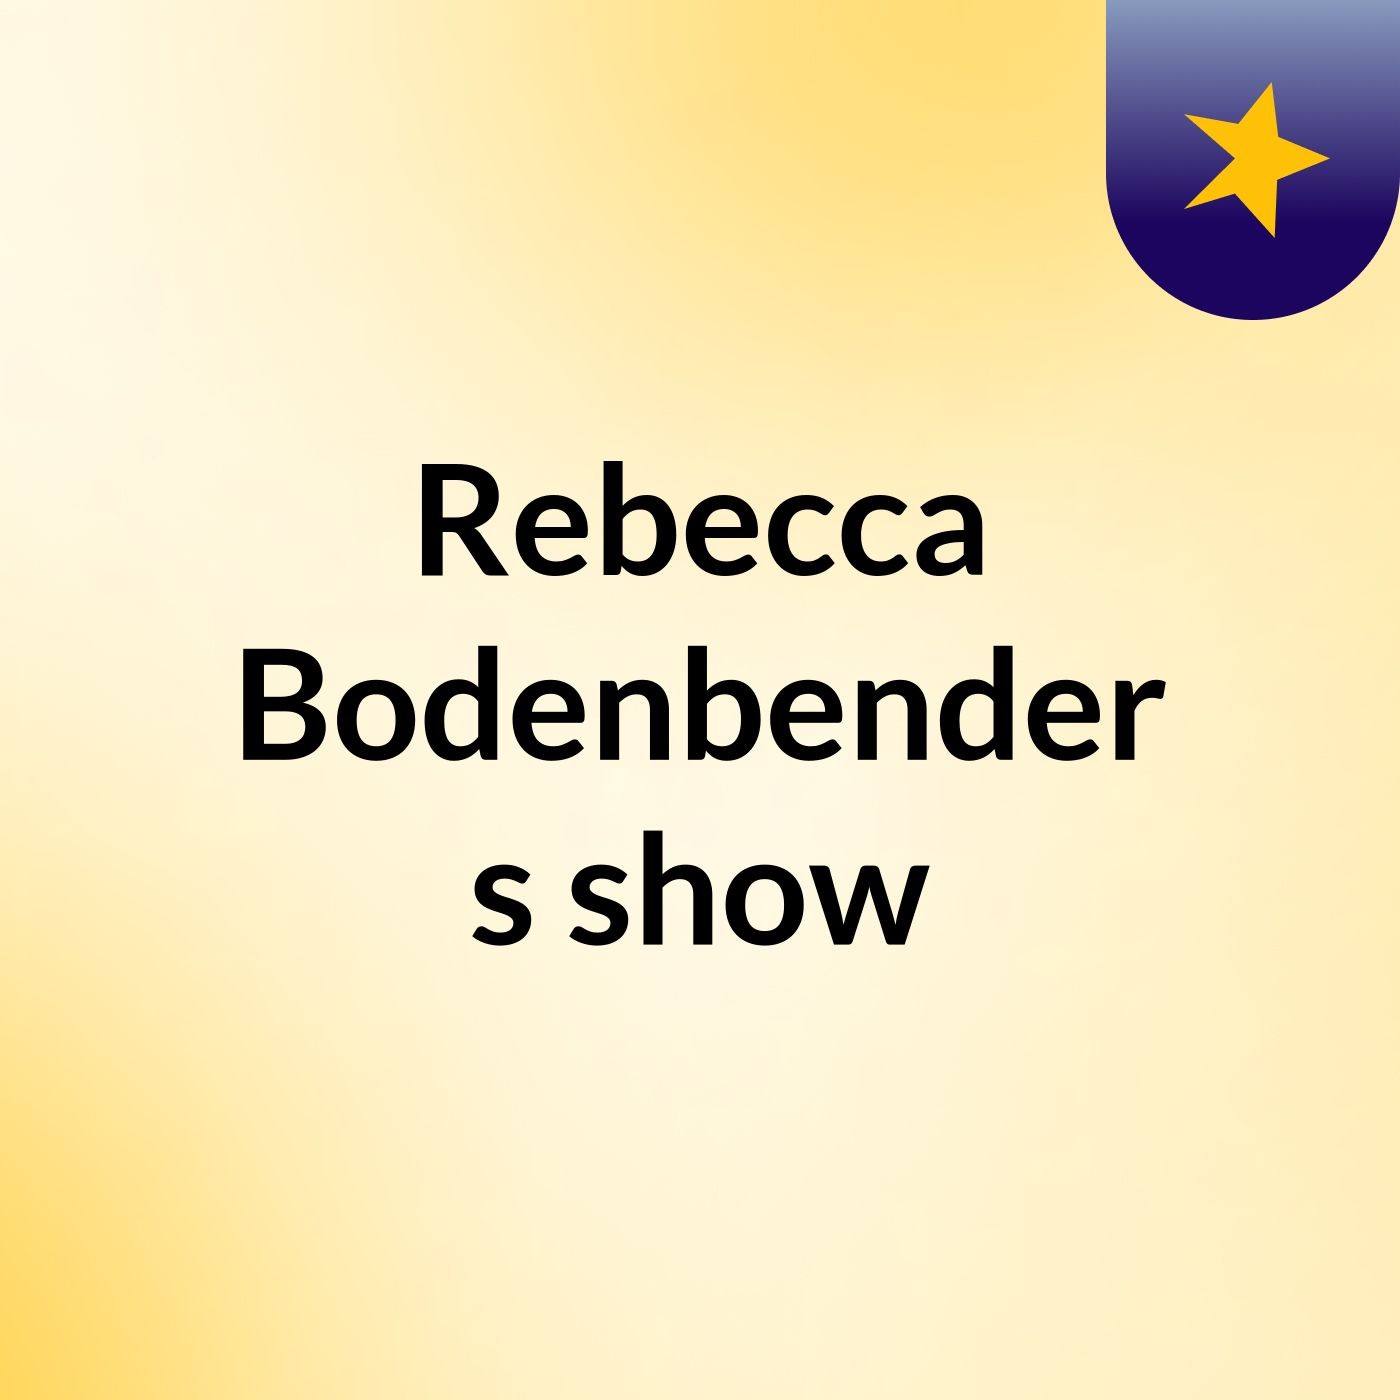 Rebecca Bodenbender's show